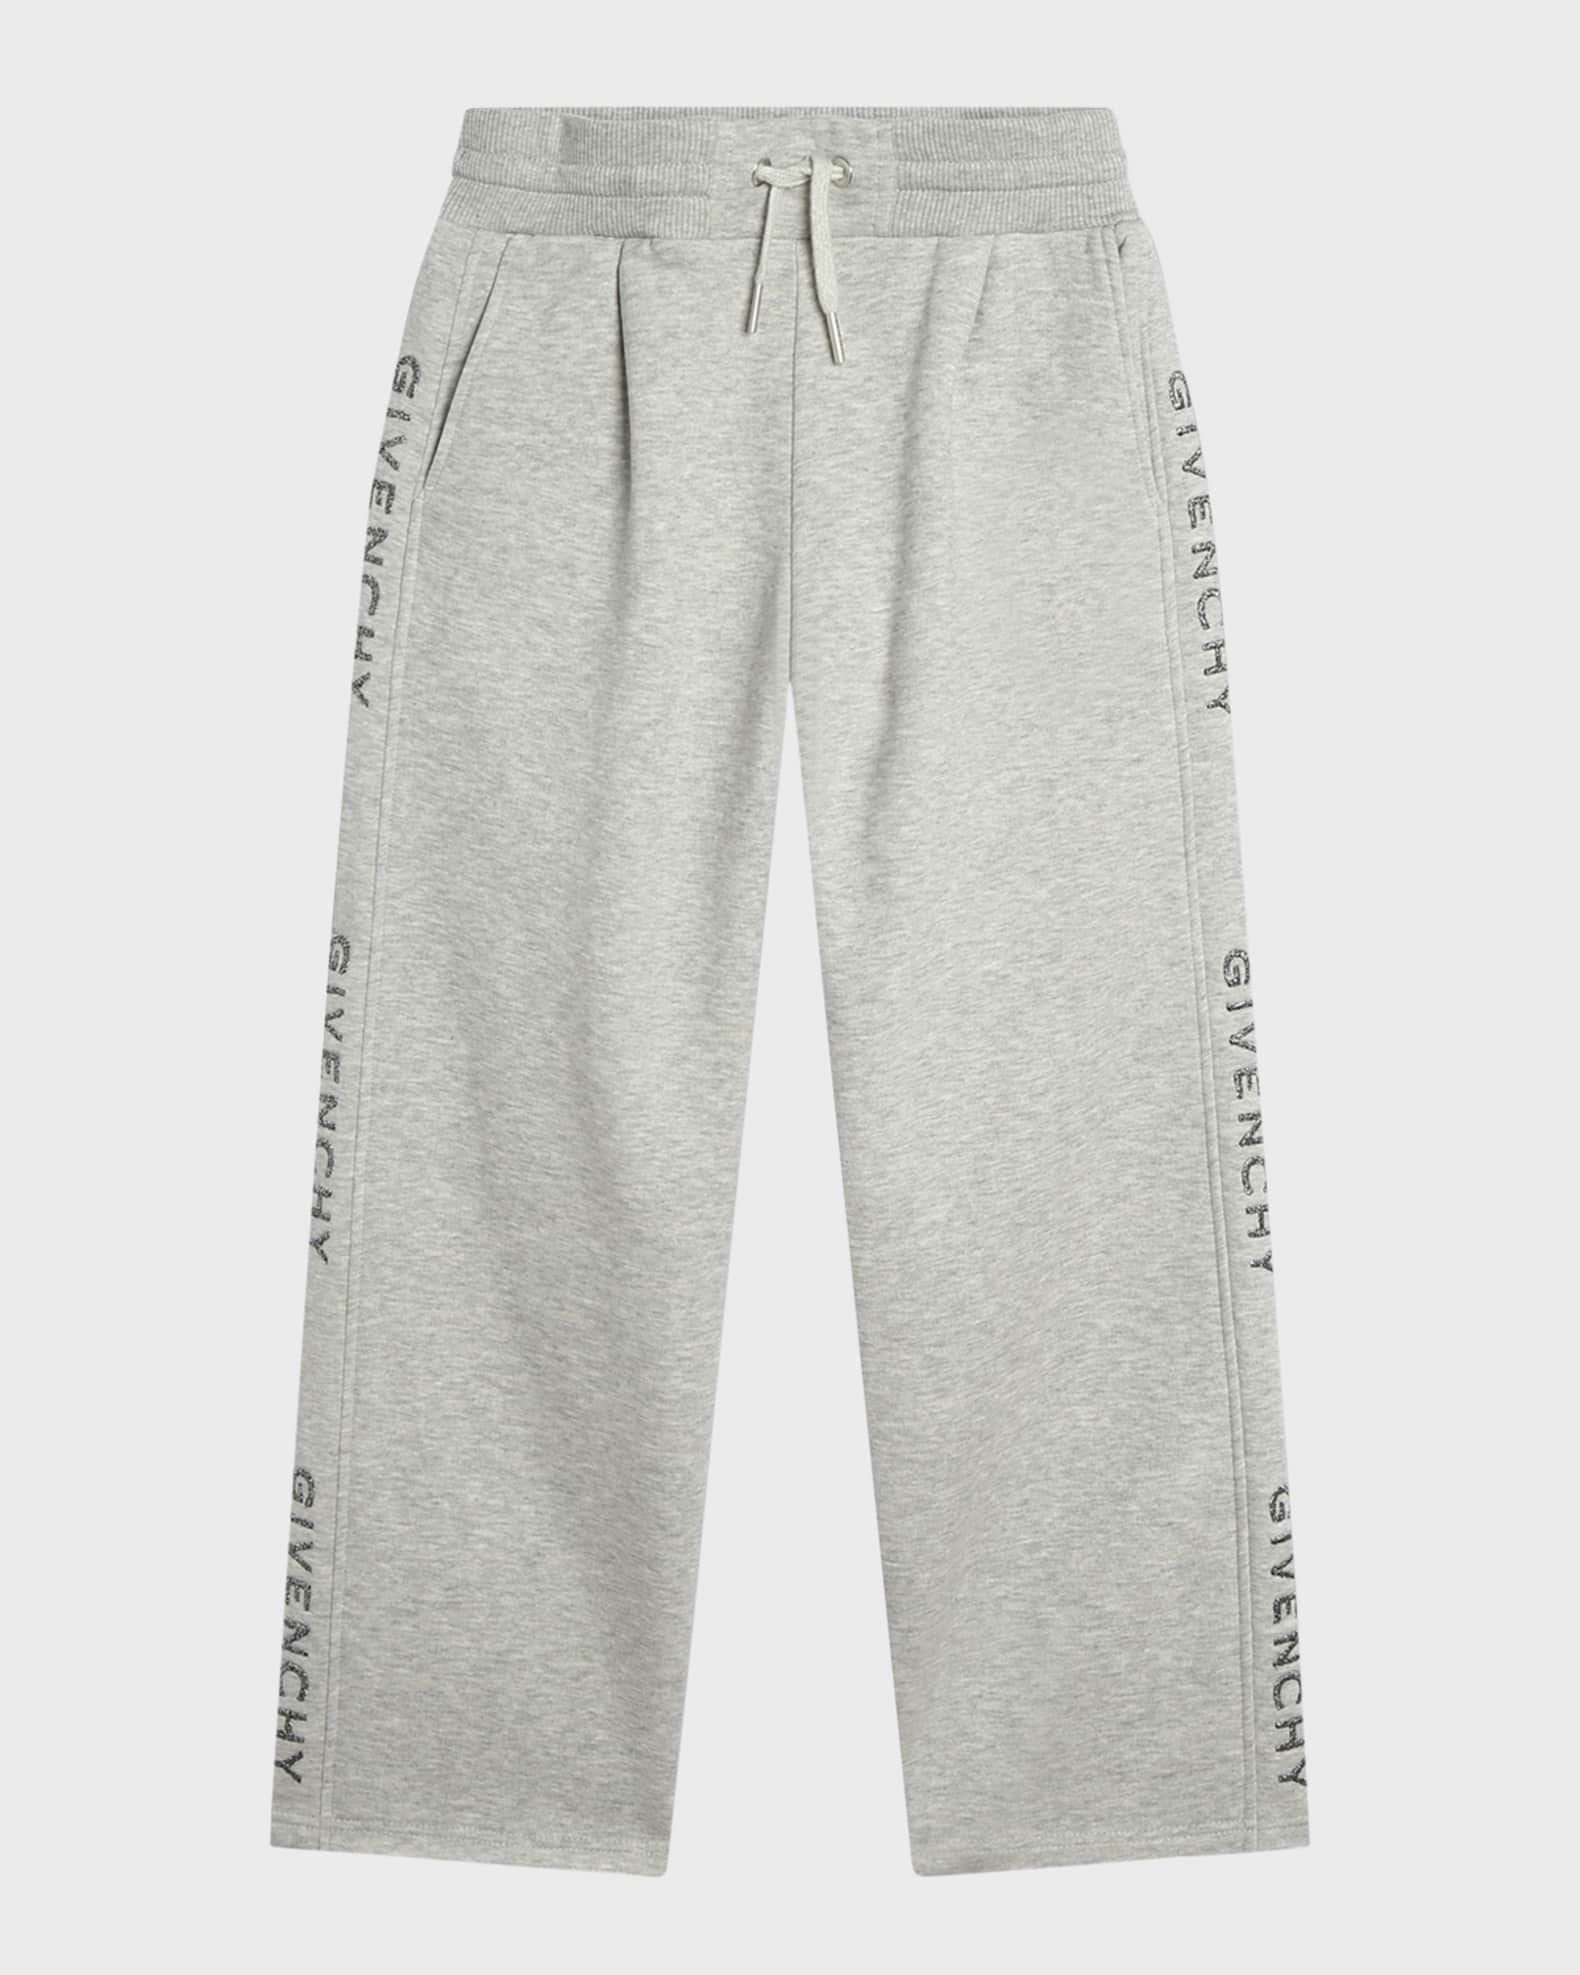 LV Snowflake Jogging Pants - Luxury Pants - Ready to Wear